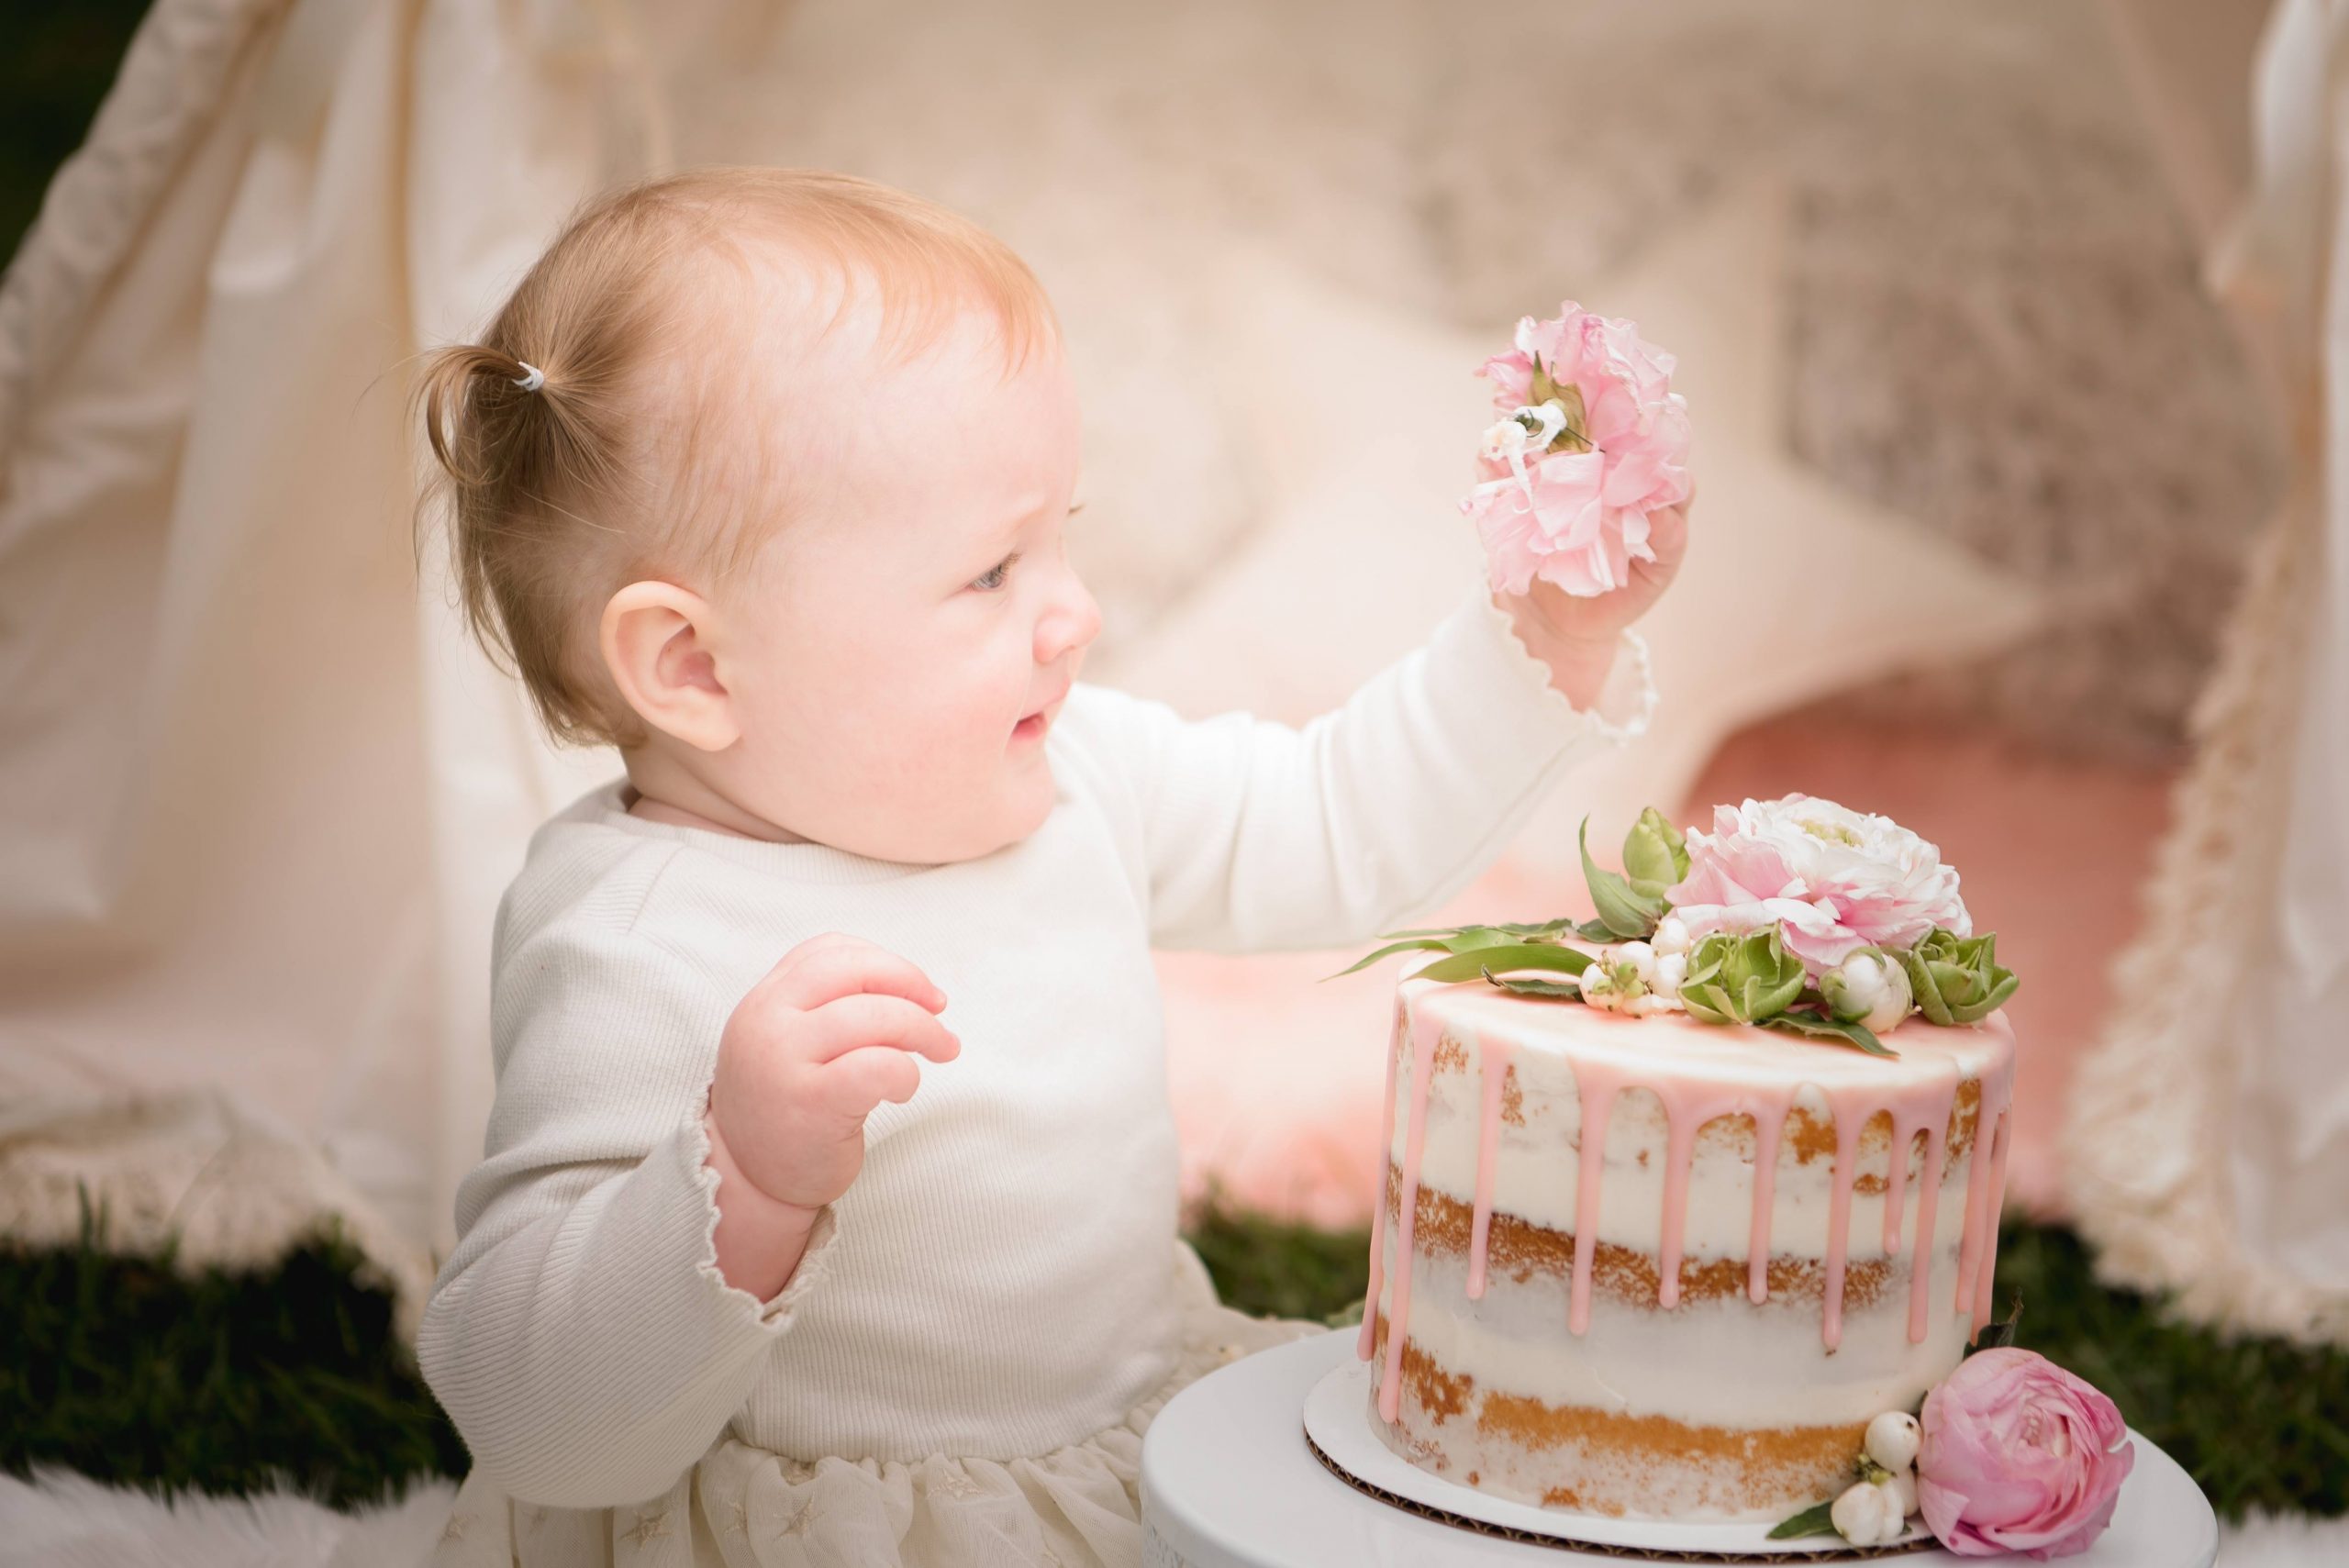 Jill Brommely Cake Smash 1002 1 scaled - Cake Smash - 1st Birthday